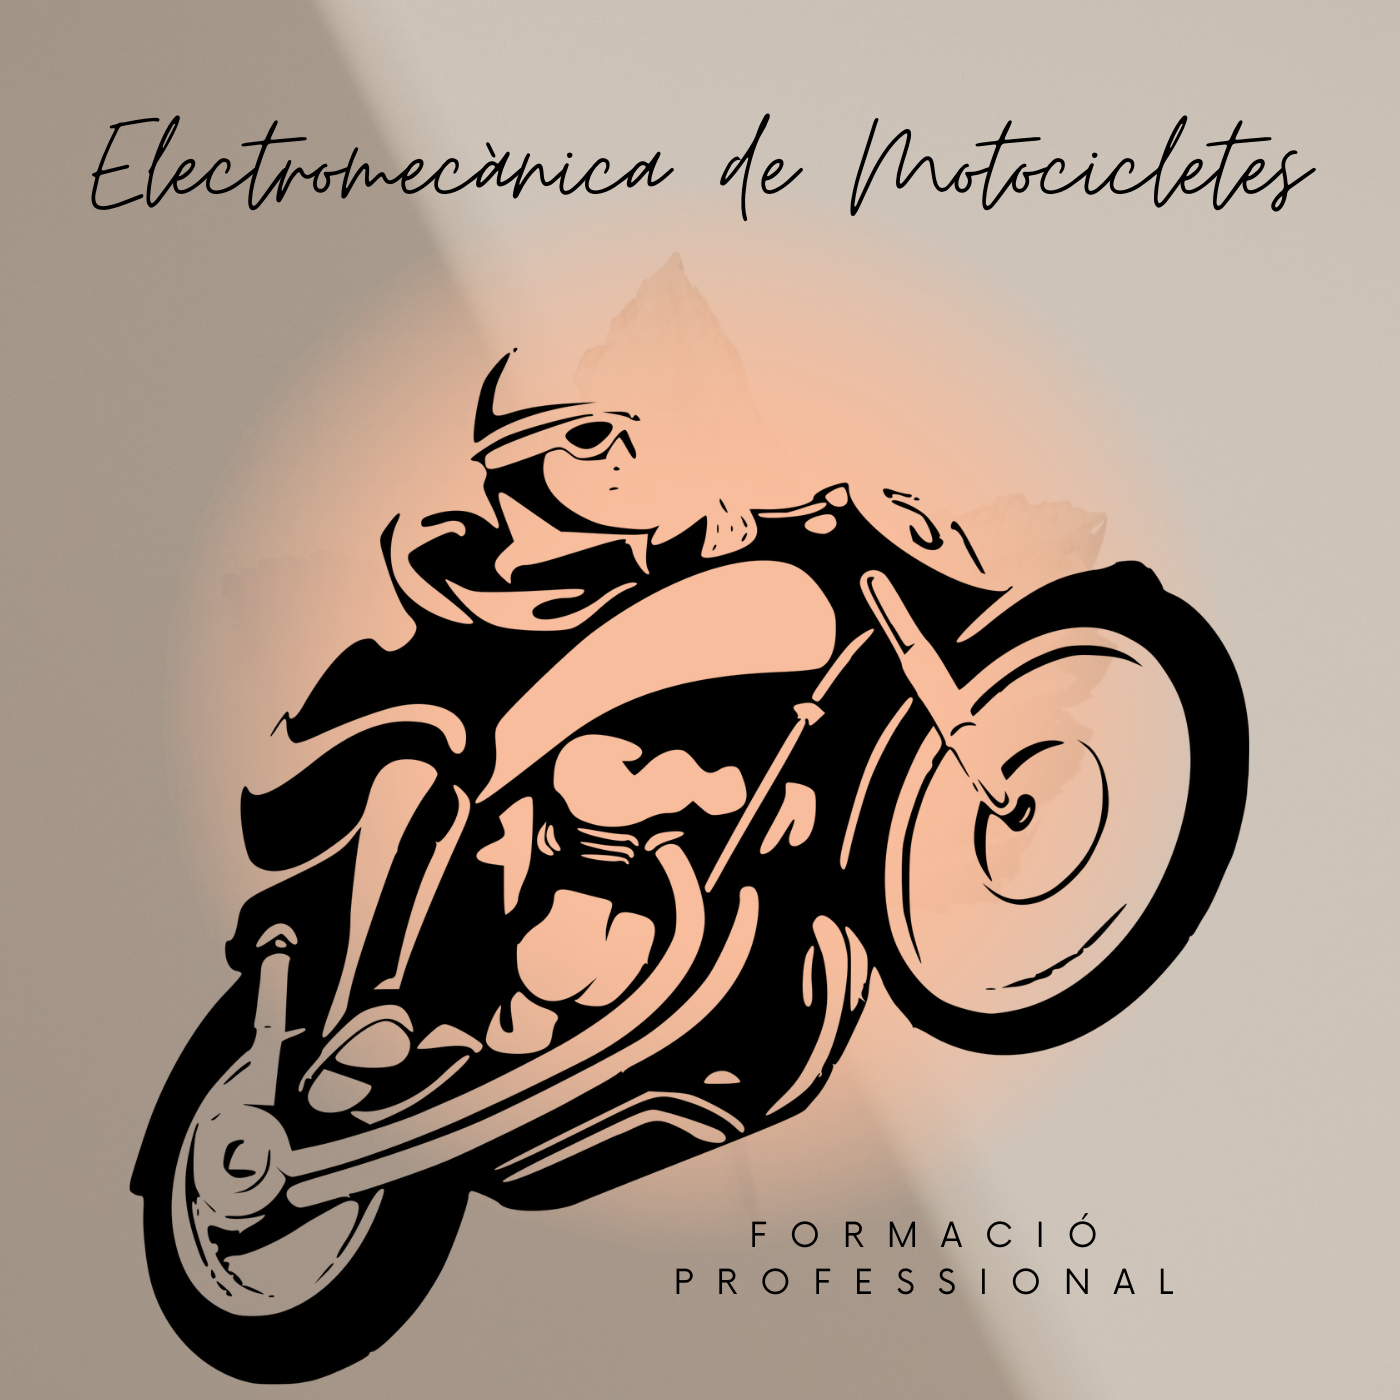 Electromecànica de Motocicletes